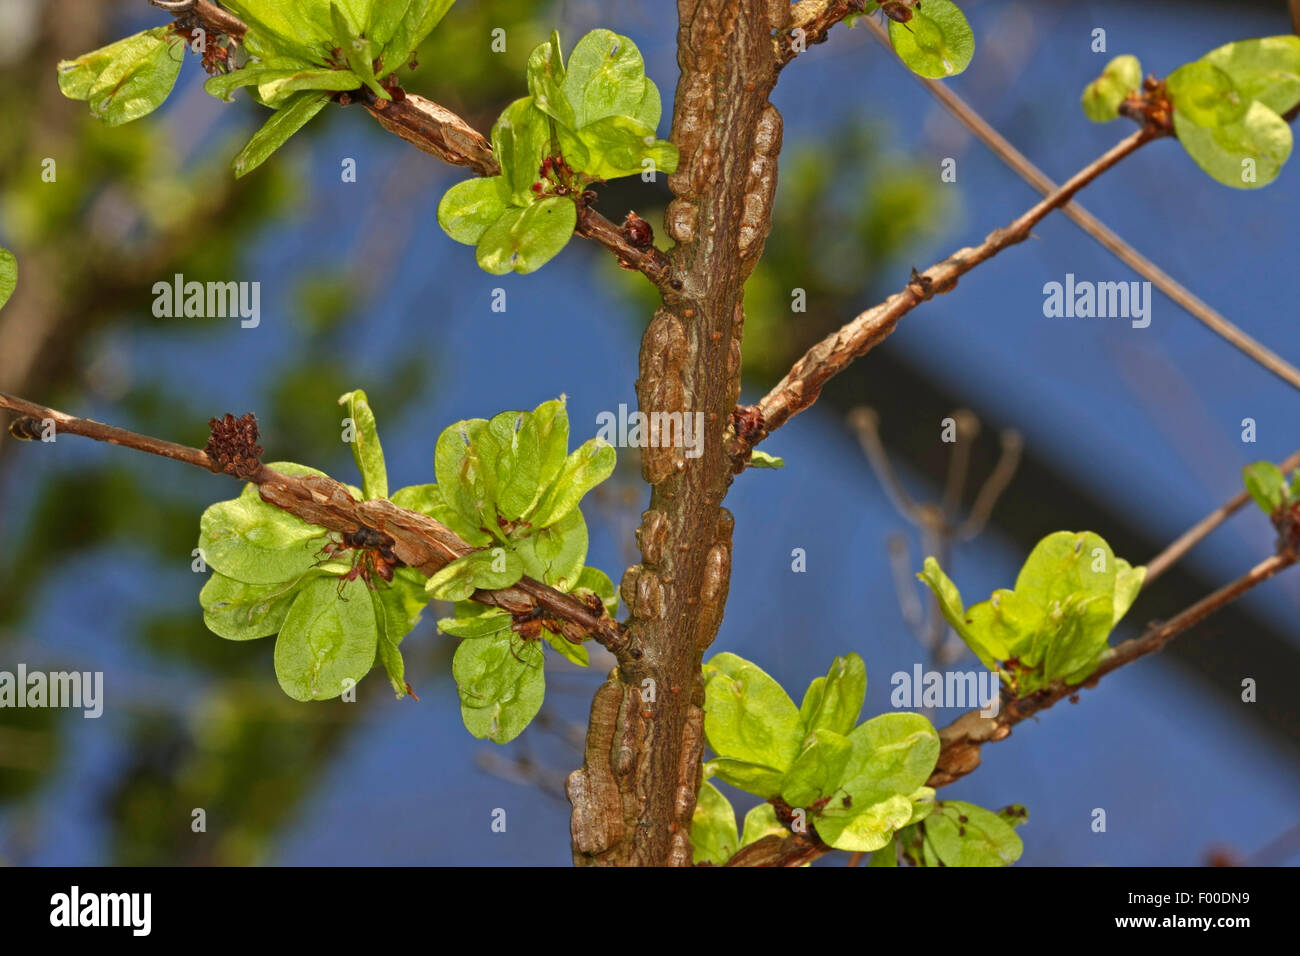 smooth-leaf elm (Ulmus minor, Ulmus campestris, Ulmus carpinifolia), branch with corky wings and fruitzs, Germany Stock Photo